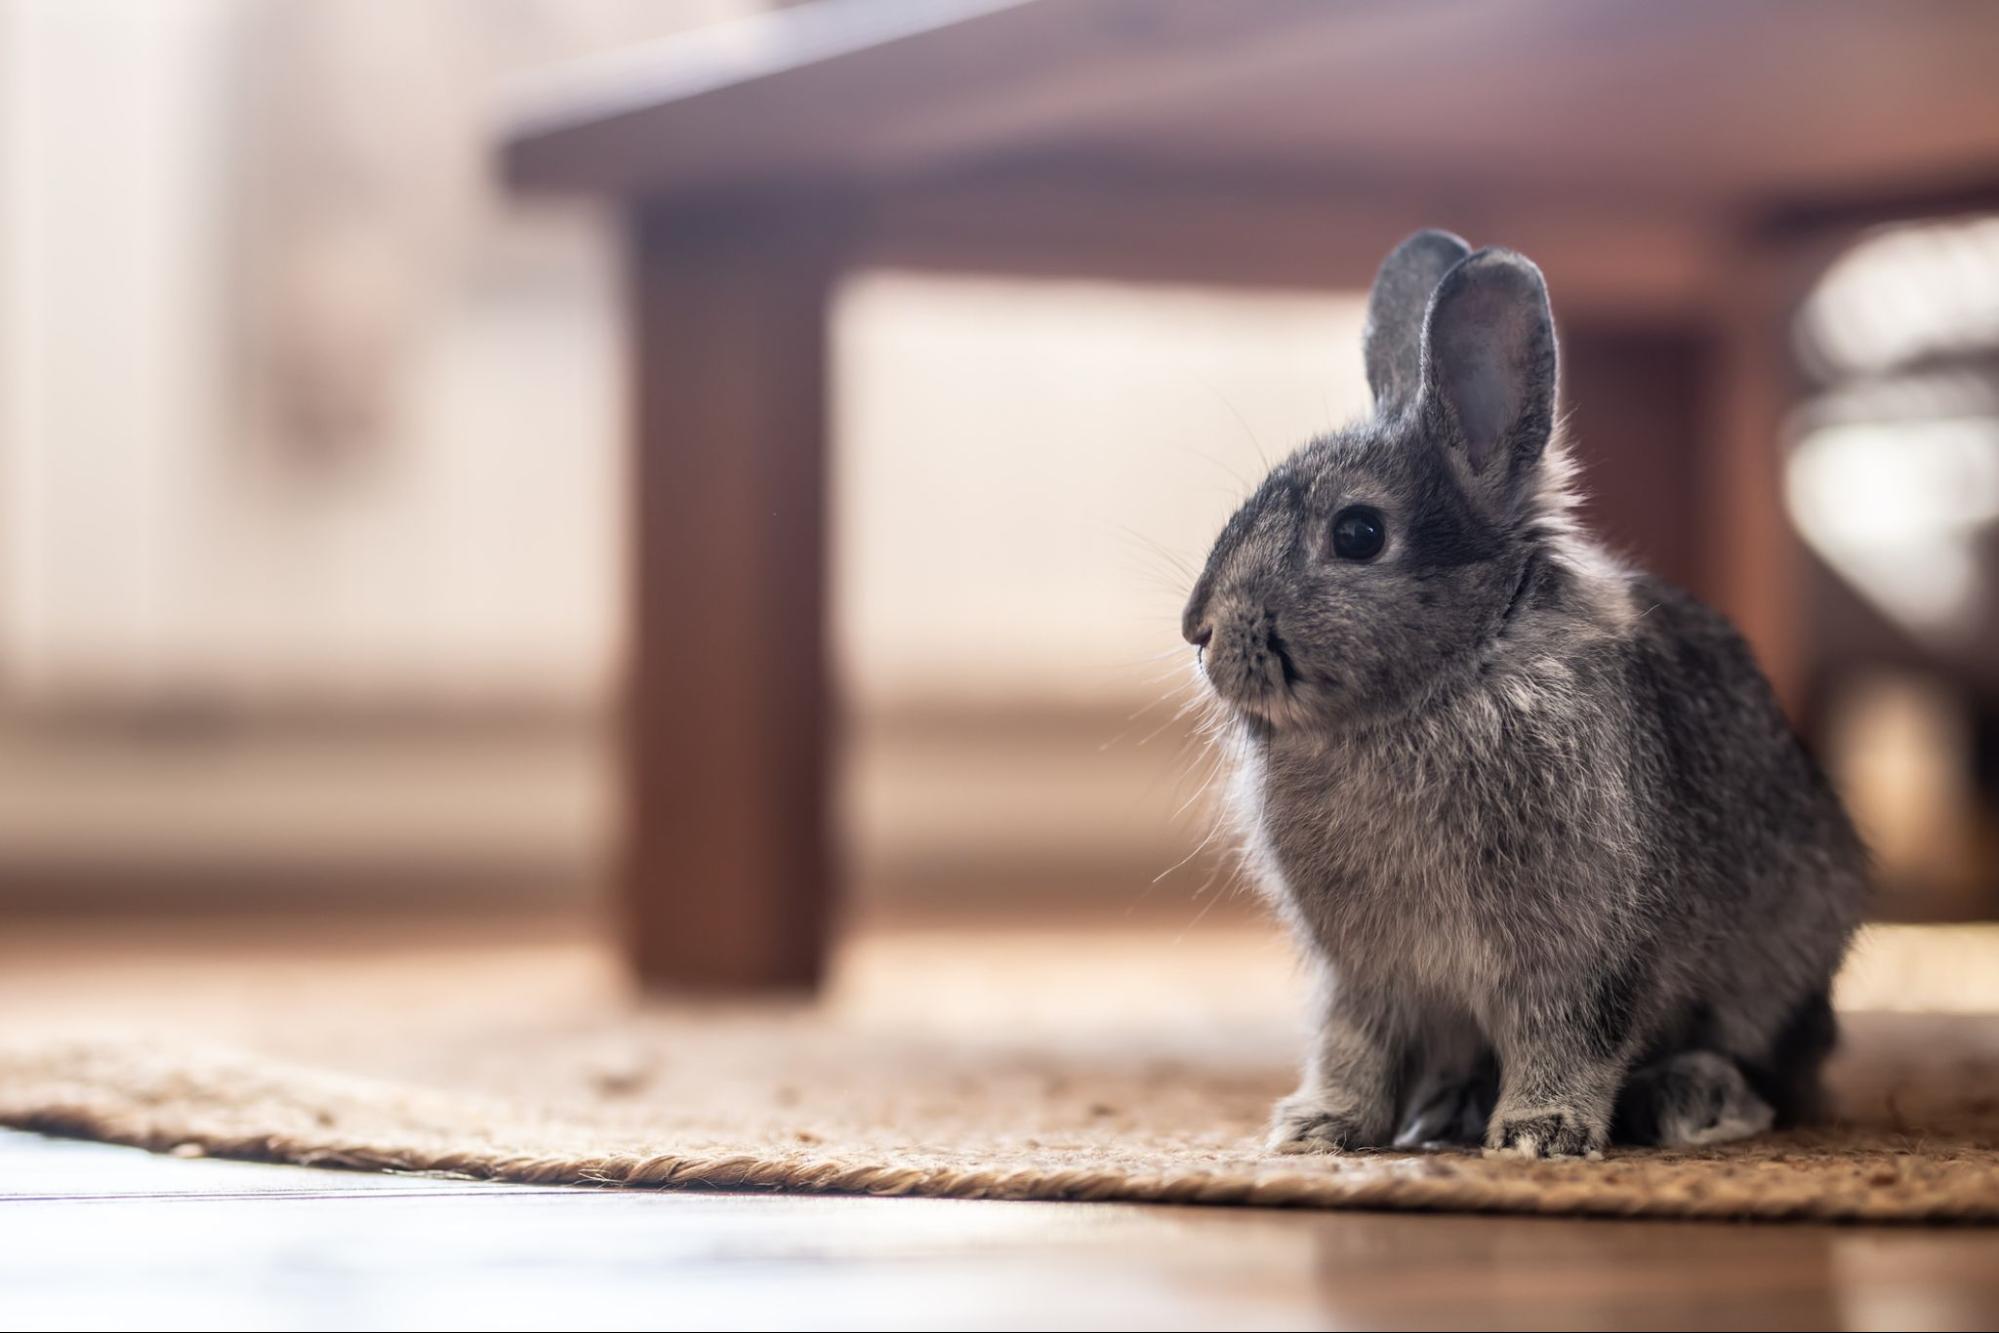 A grey bunny sits underneath a coffee table